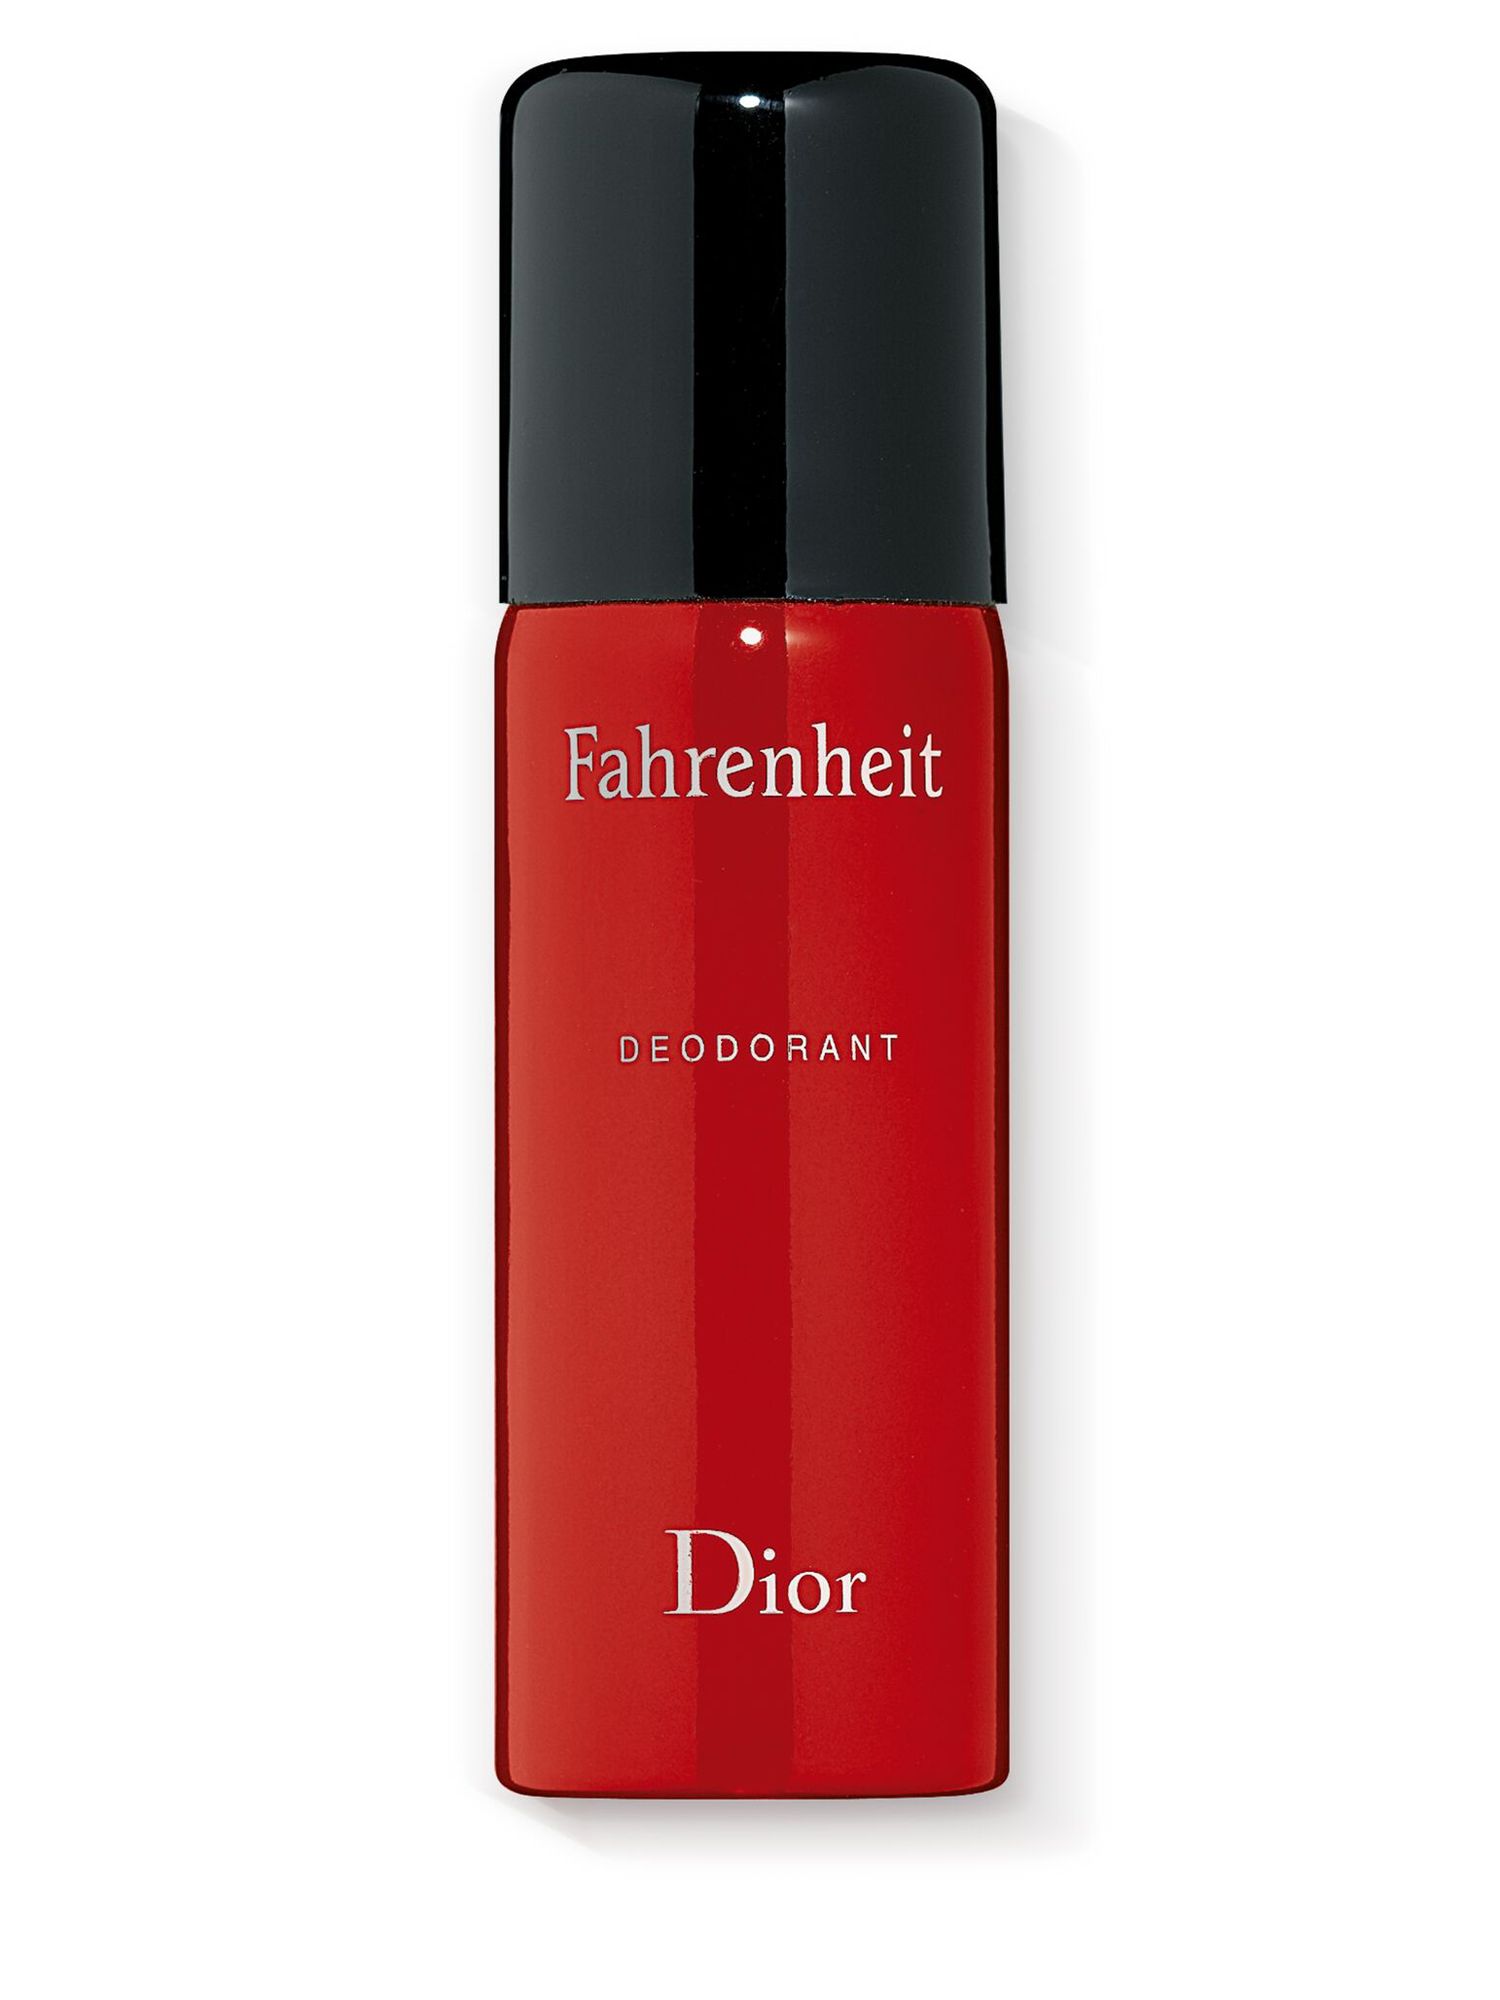 DIOR Fahrenheit Deodorant Spray, 150ml